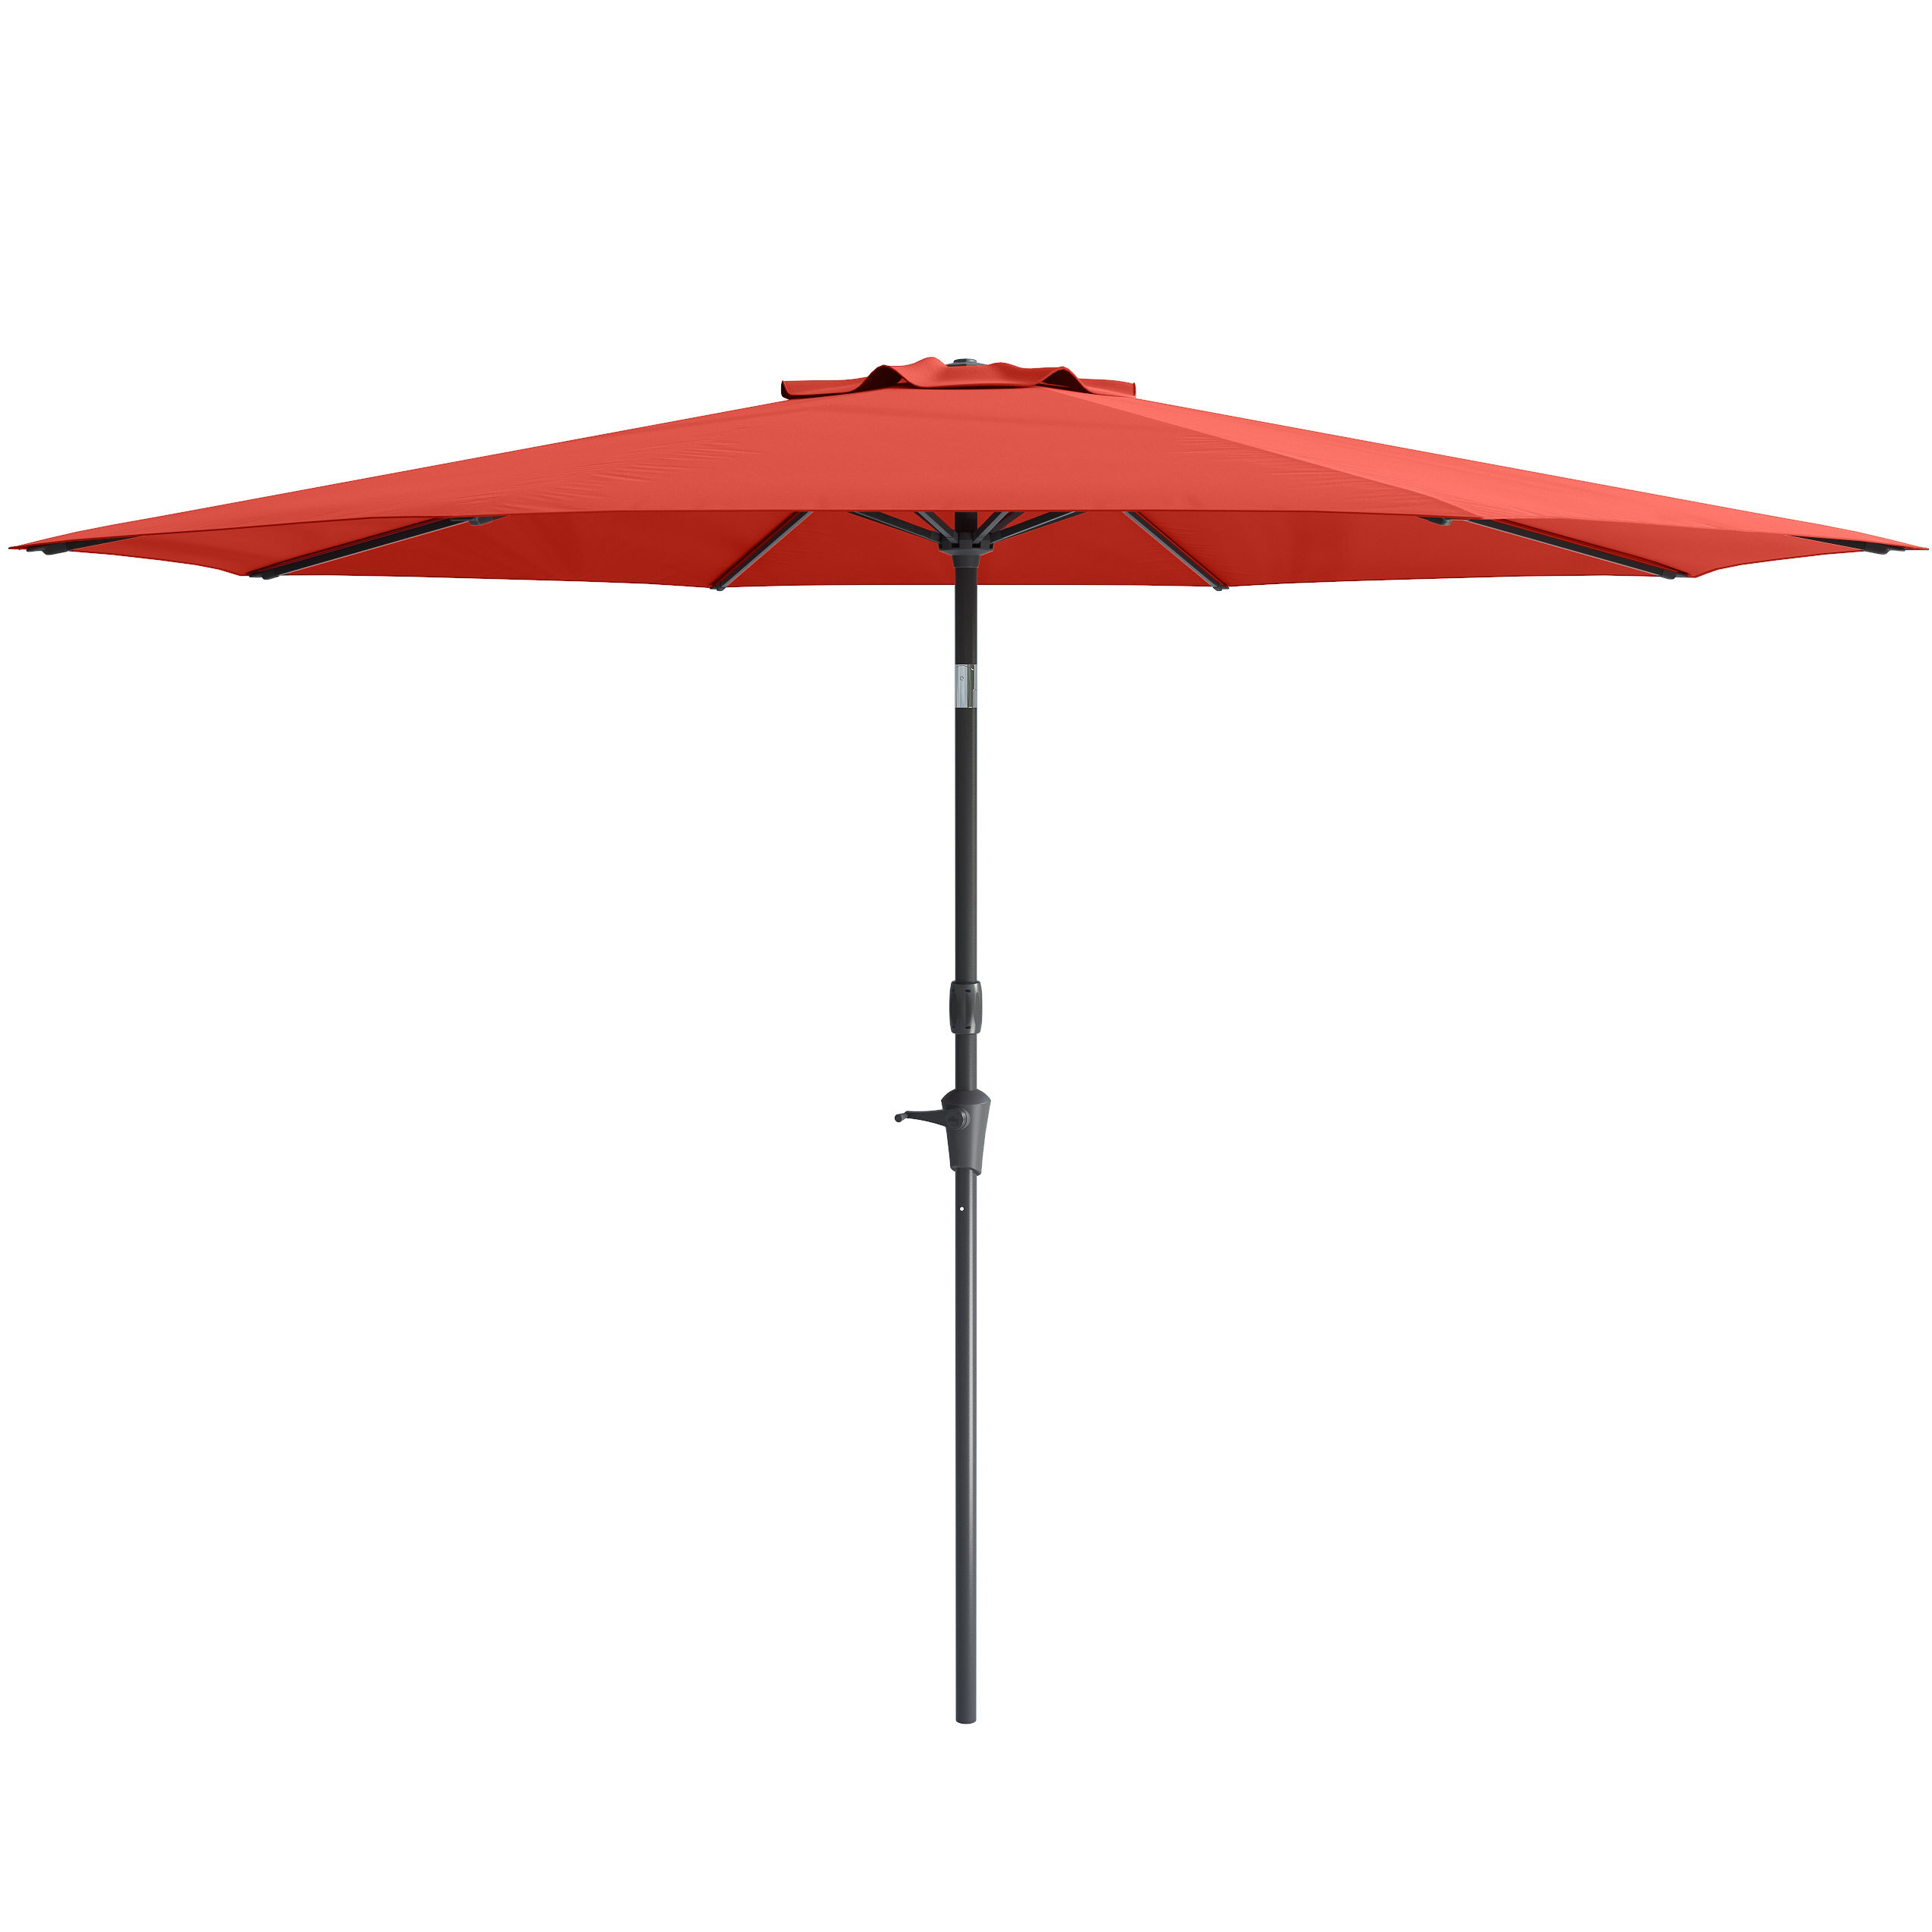 Wind Resistant Patio Umbrella Visualhunt, Best Patio Umbrella For Windy Conditions